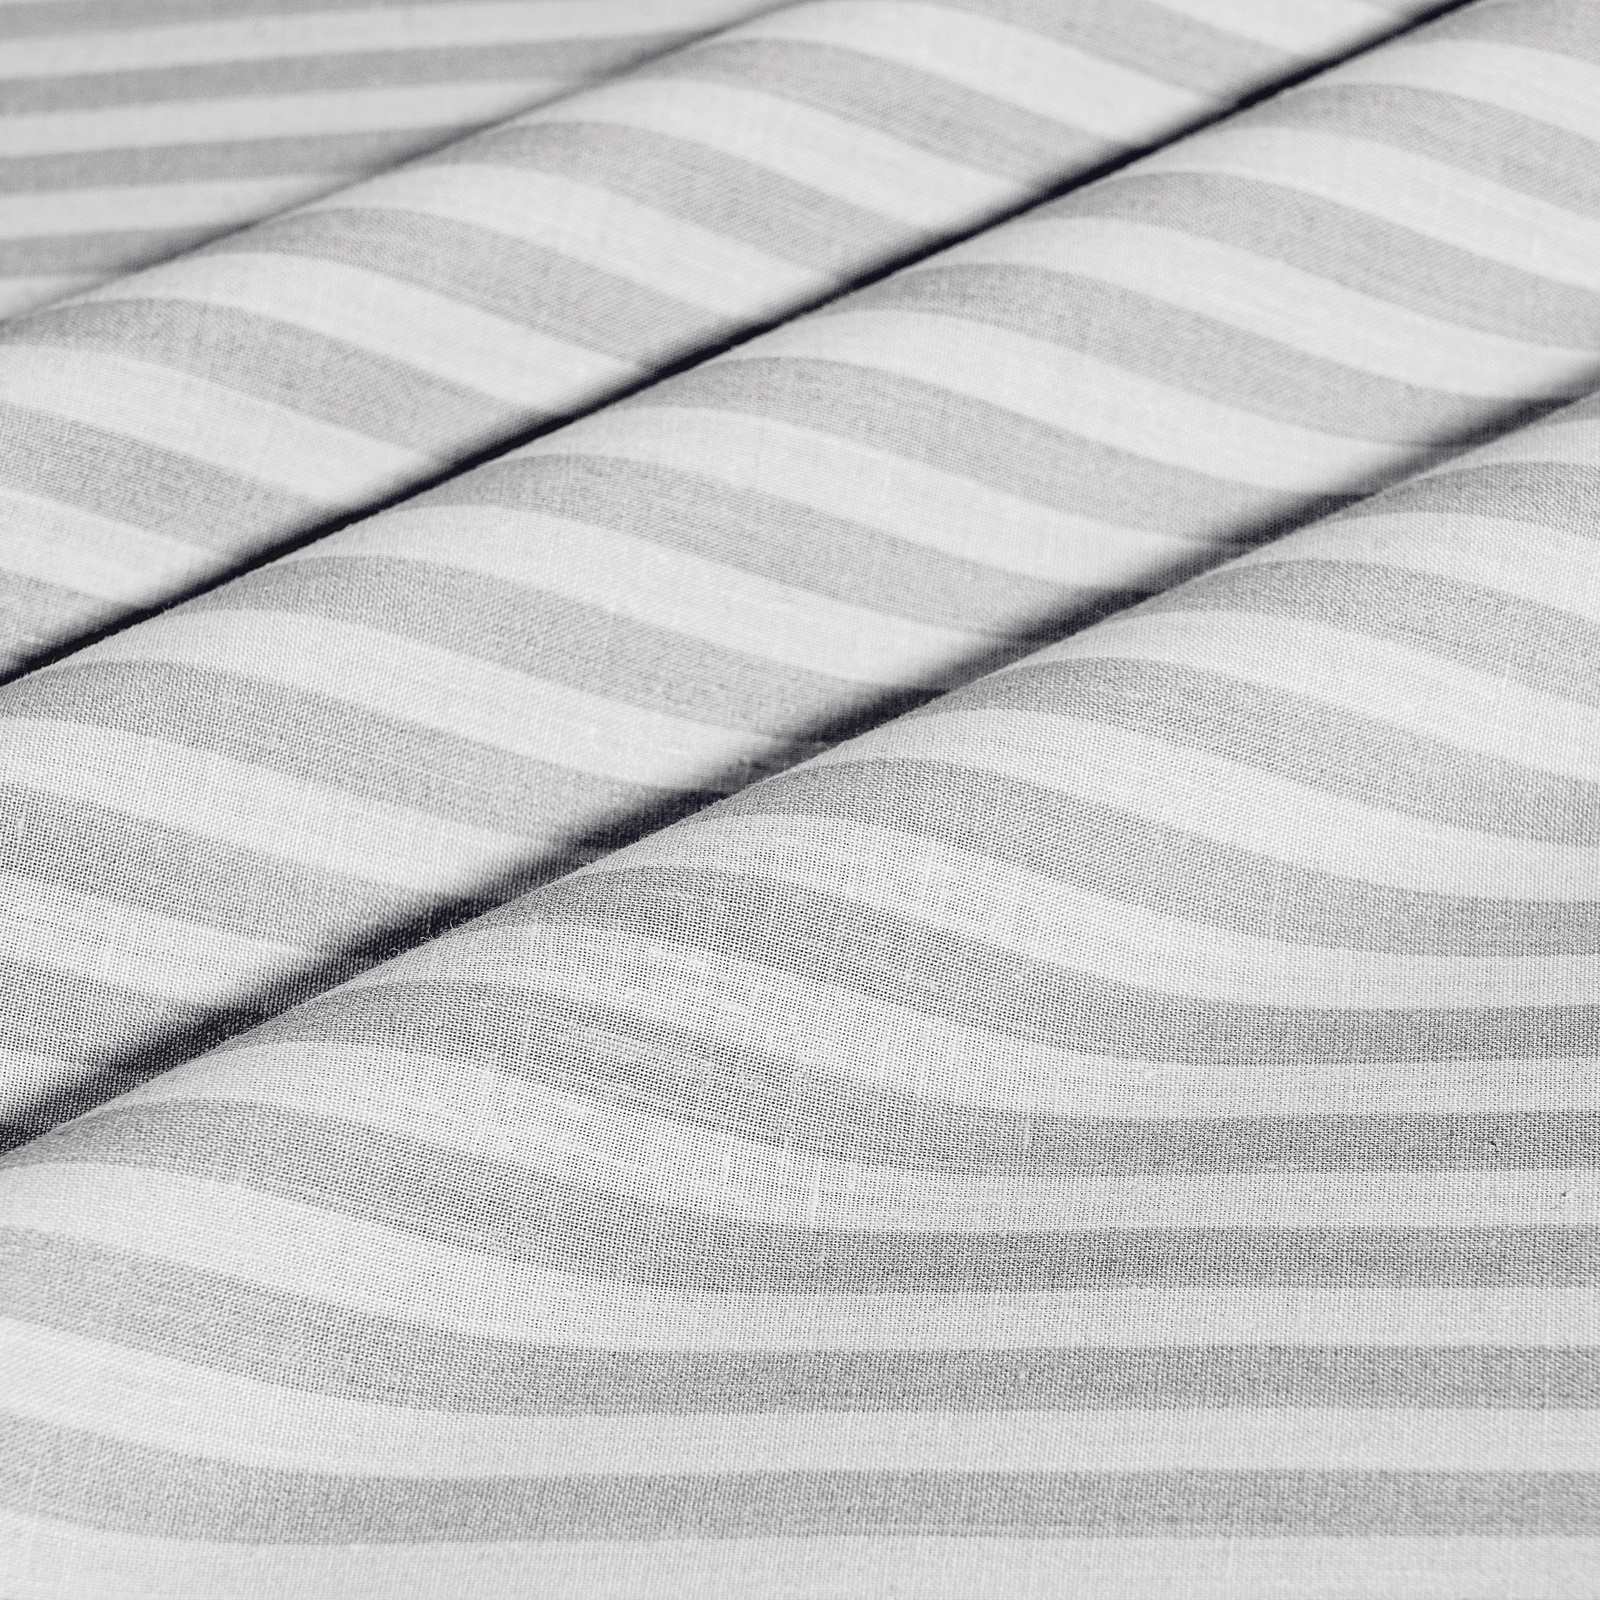 Простыня на резинке Medsleep Линдау светло-серый 160х200х25 см - фото 2